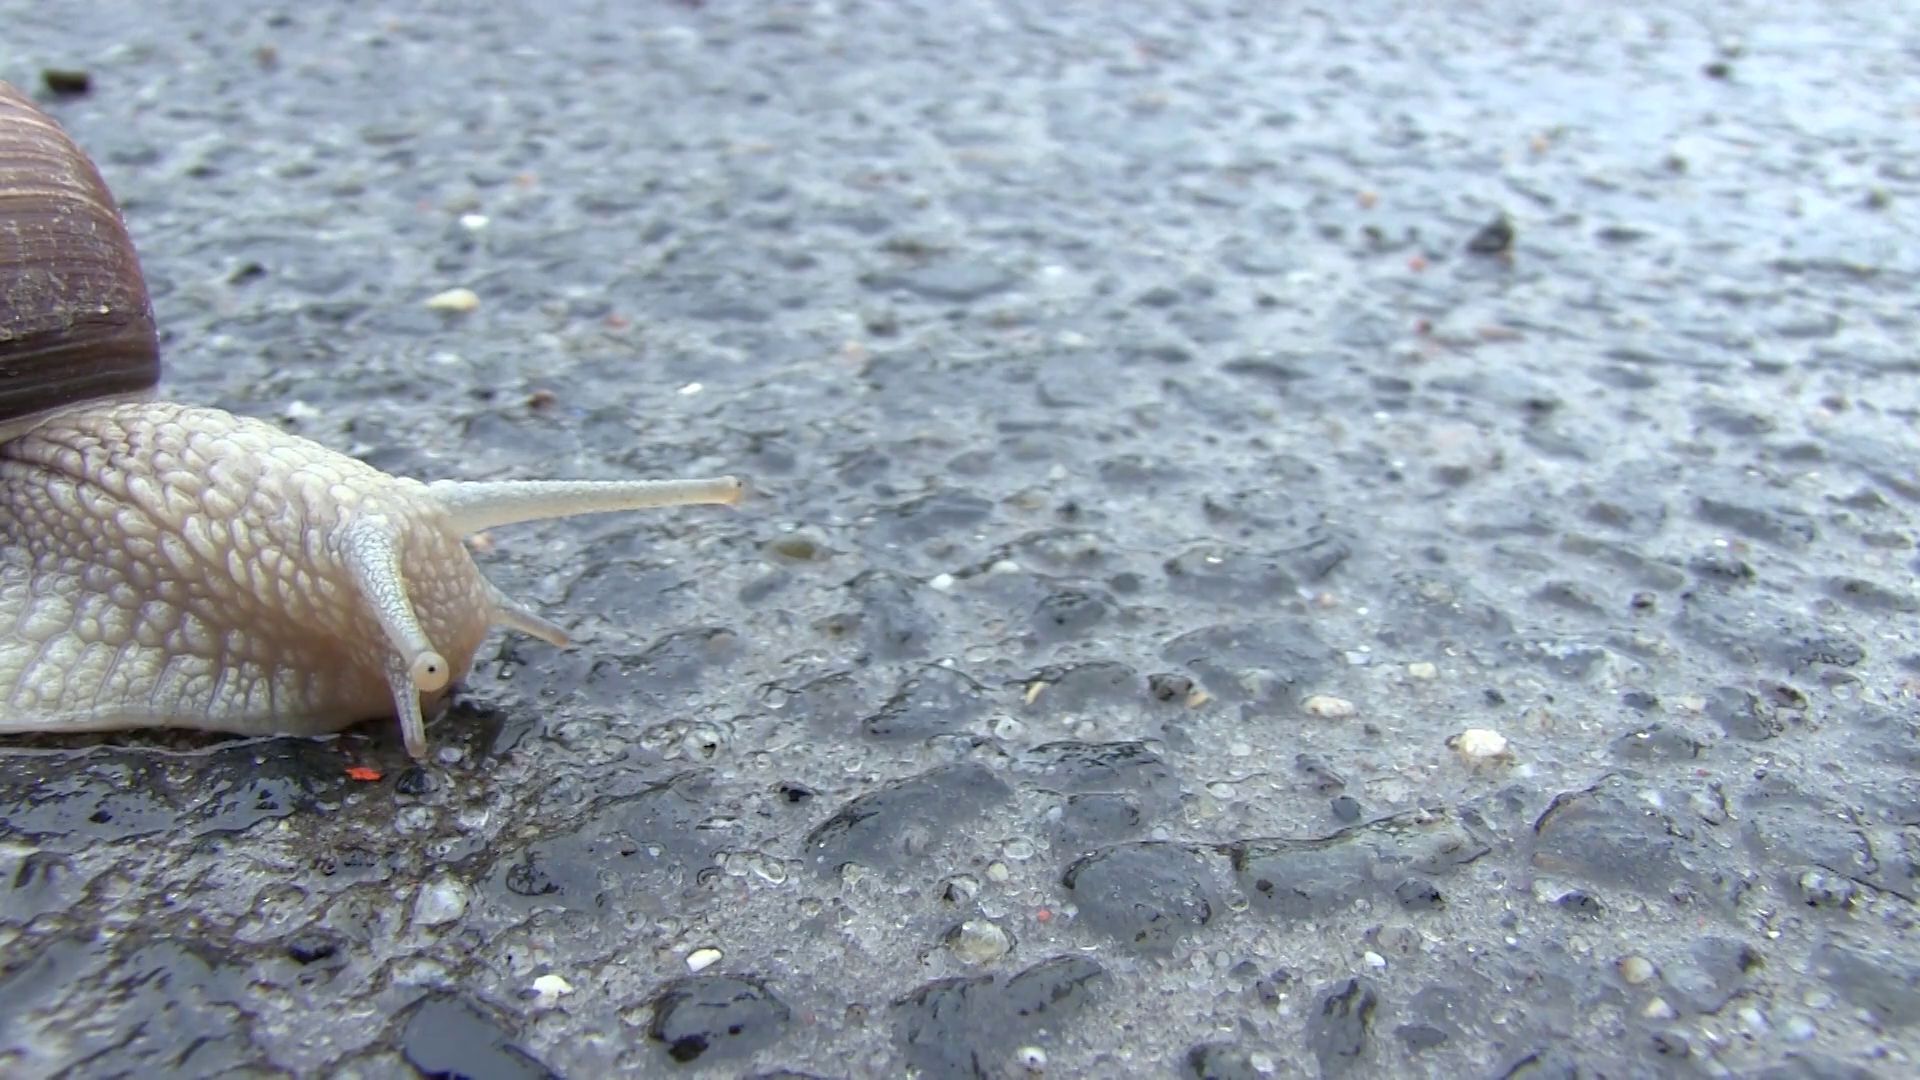 Snail On A Road. Snail Crosses the Street on Wet Asphalt After Rain ...